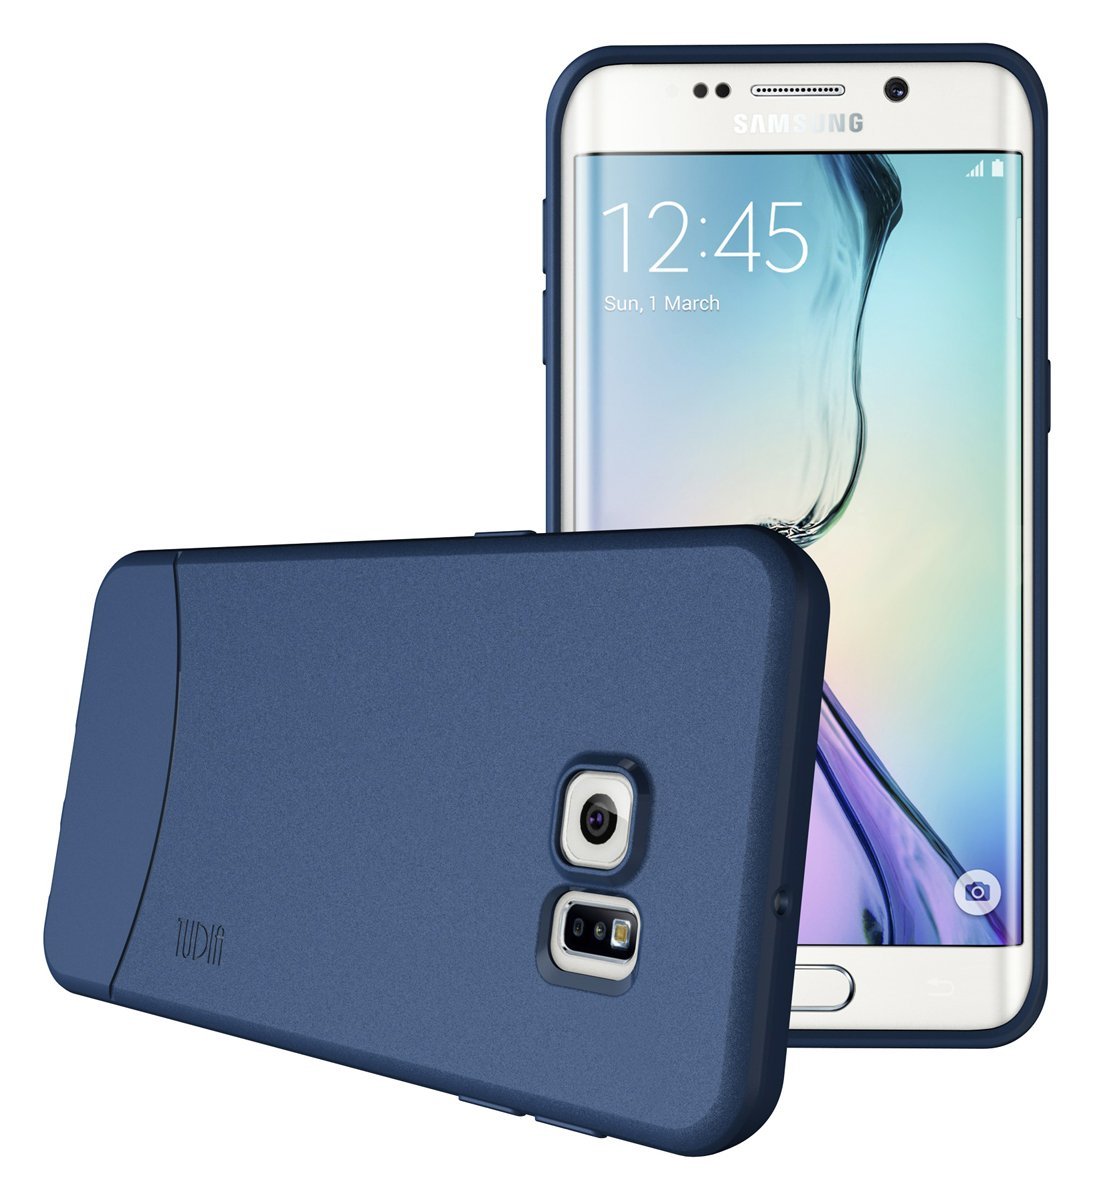 Samsung Galaxy S6 Edge+ Cases, best Samsung Galaxy S6 Edge+ Cases, Samsung Galaxy S6 Edge+ Case, S6 Edge+ Cases, S6 Edge plus Cases